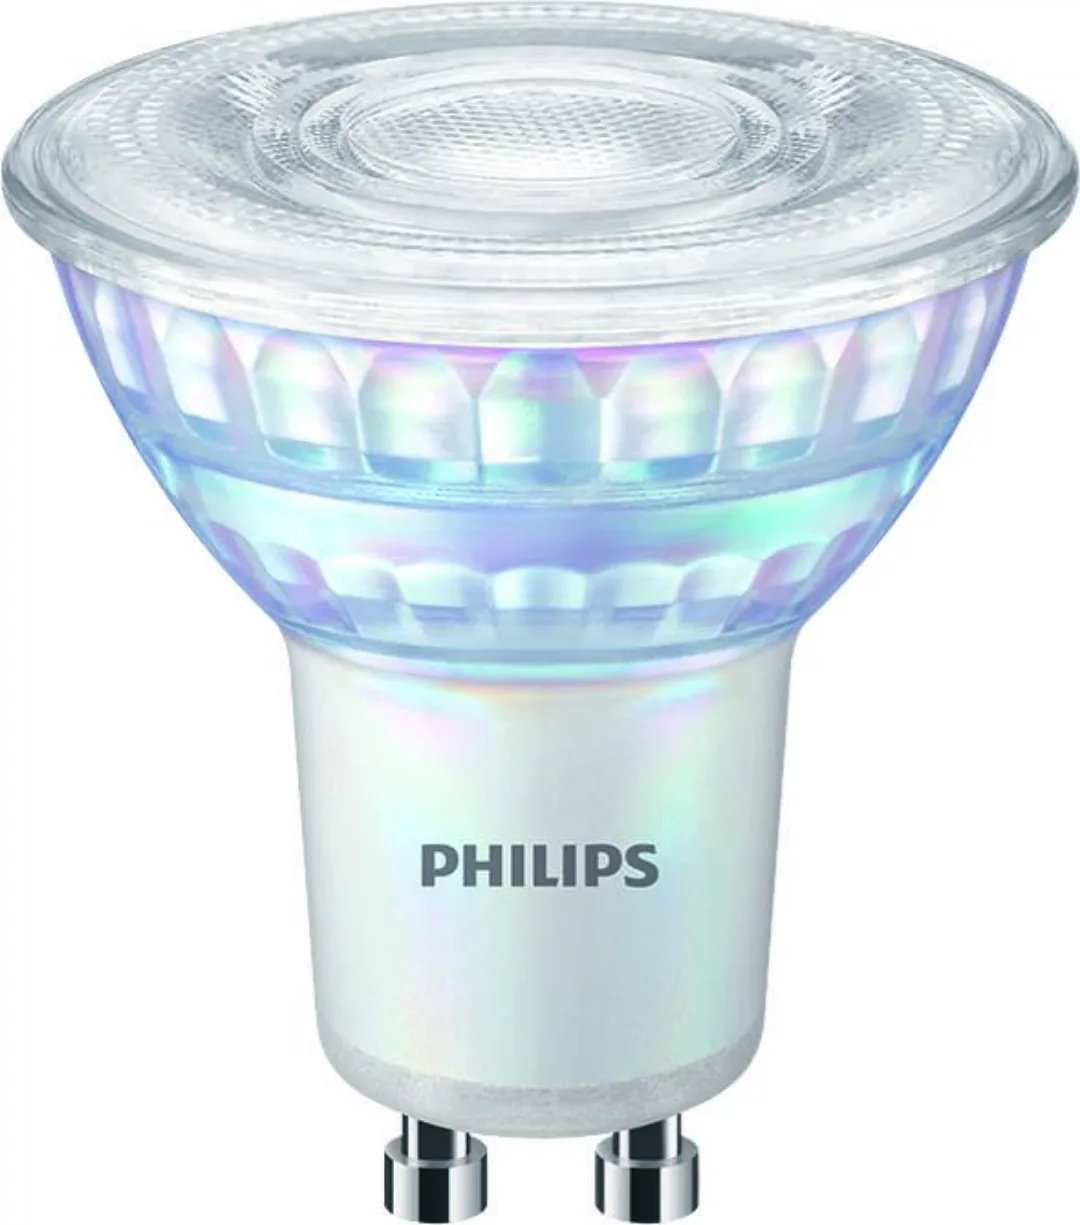 Philips Lighting LED-Reflektorlampe PAR16 GU10 830 DIM CorePro LED#72135300 günstig online kaufen